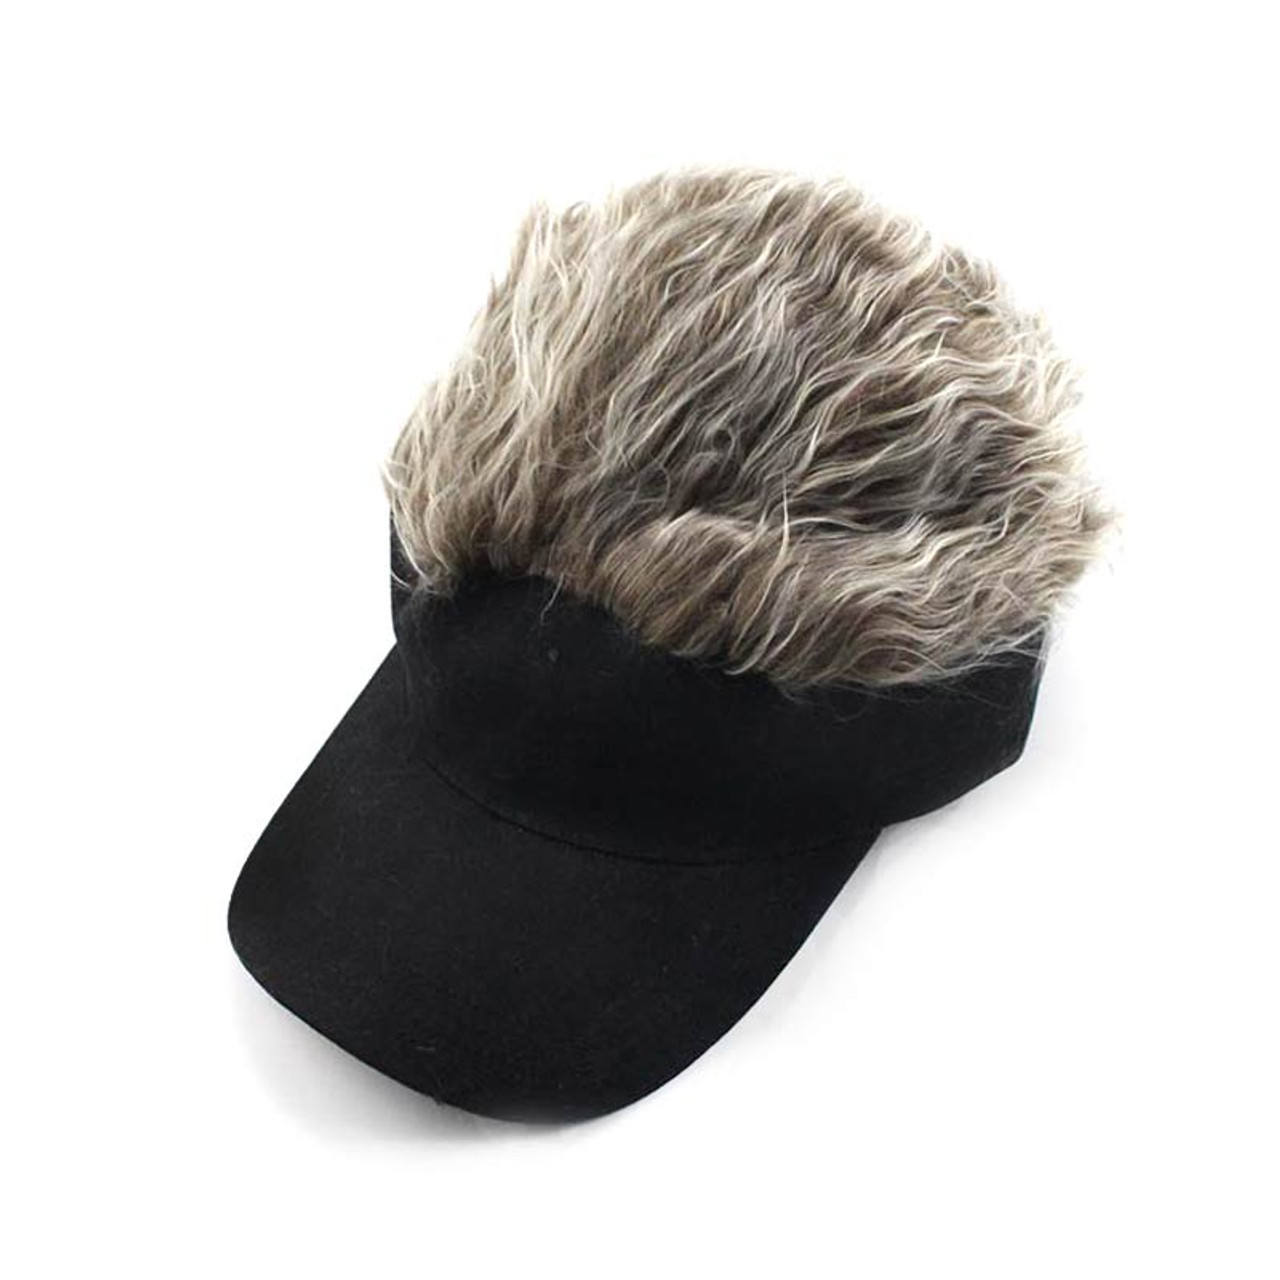 visor hat with hair